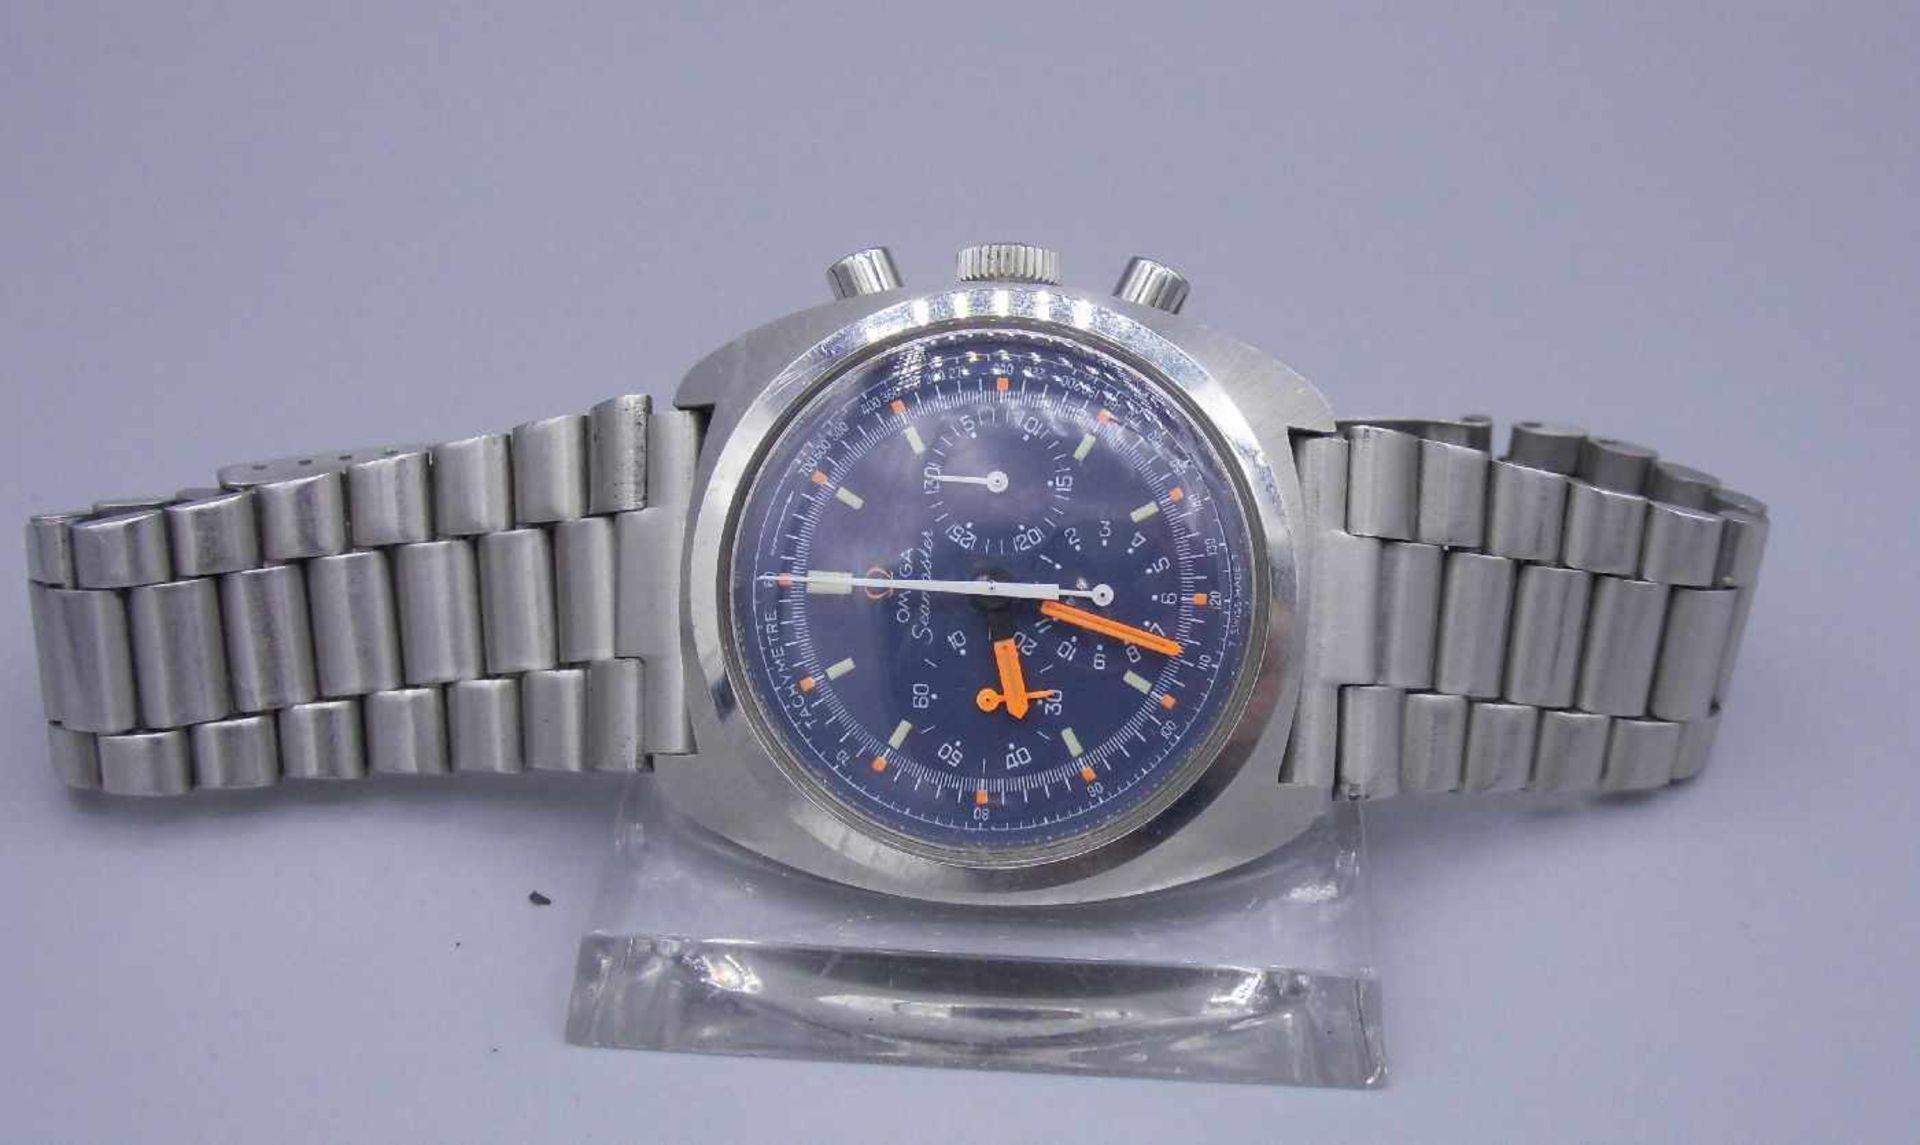 VINTAGE ARMBANDUHR / CHRONOGRAPH - Omega Seamaster / wristwatch, Handaufzug, 1970er Jahre, - Bild 2 aus 11